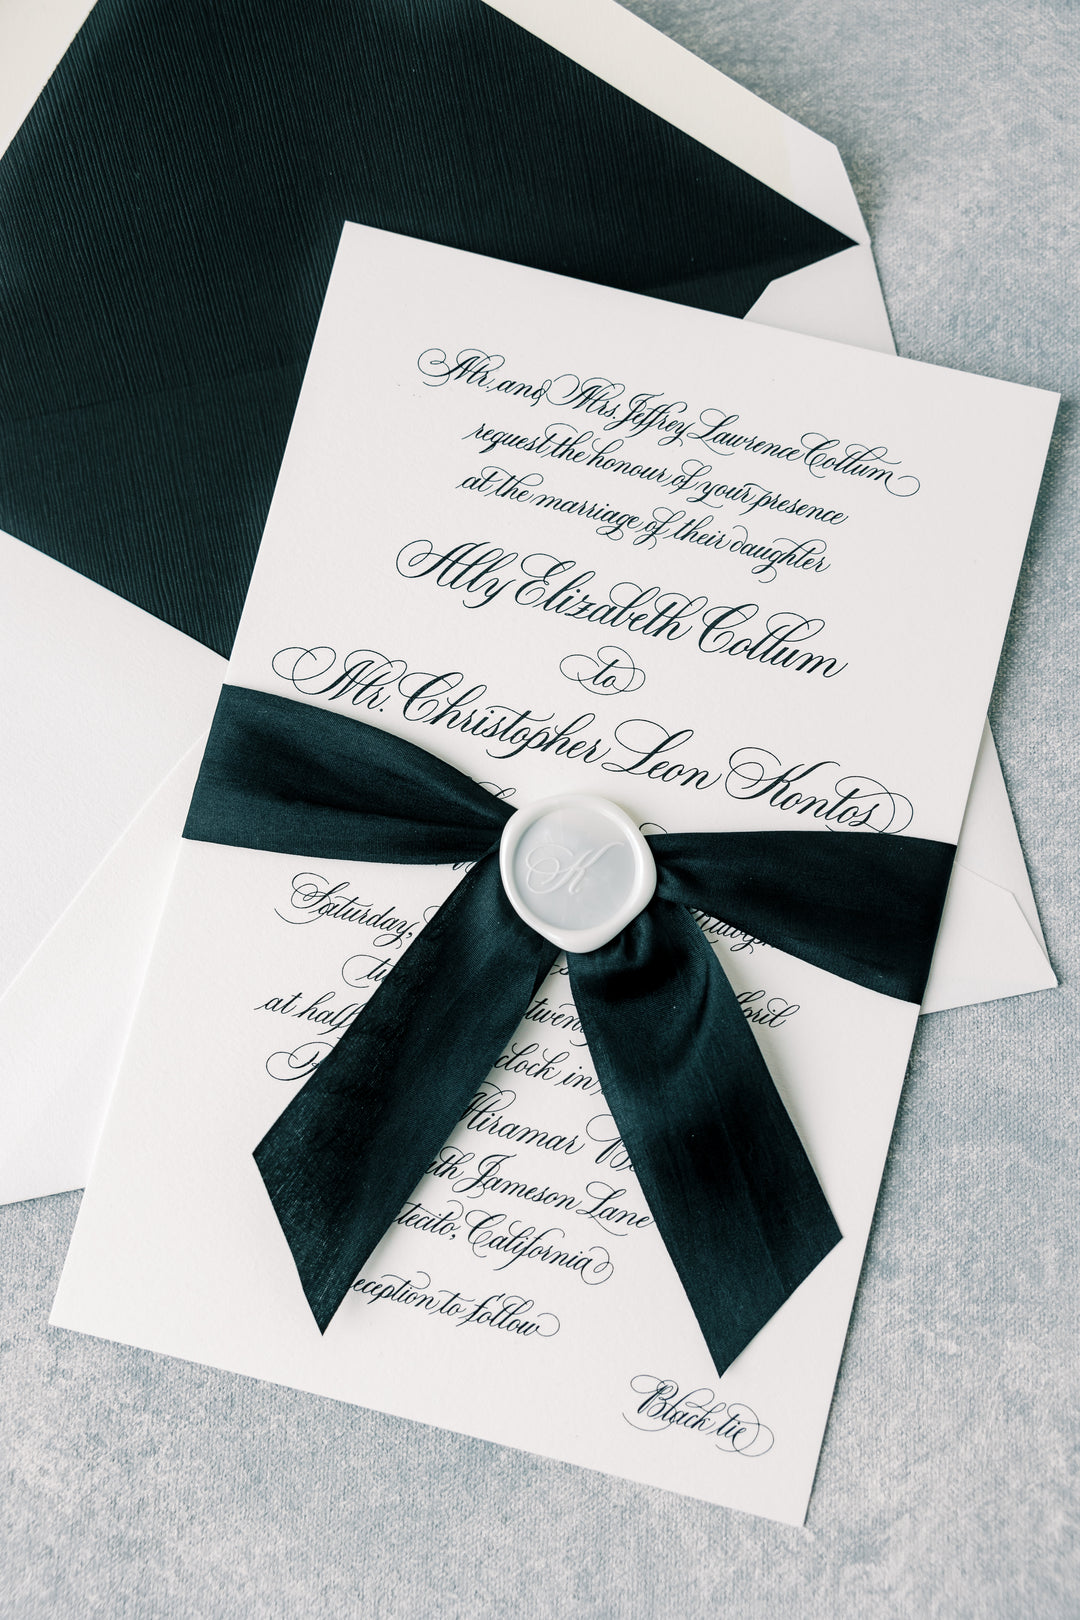 How to Address a Wedding Invitation